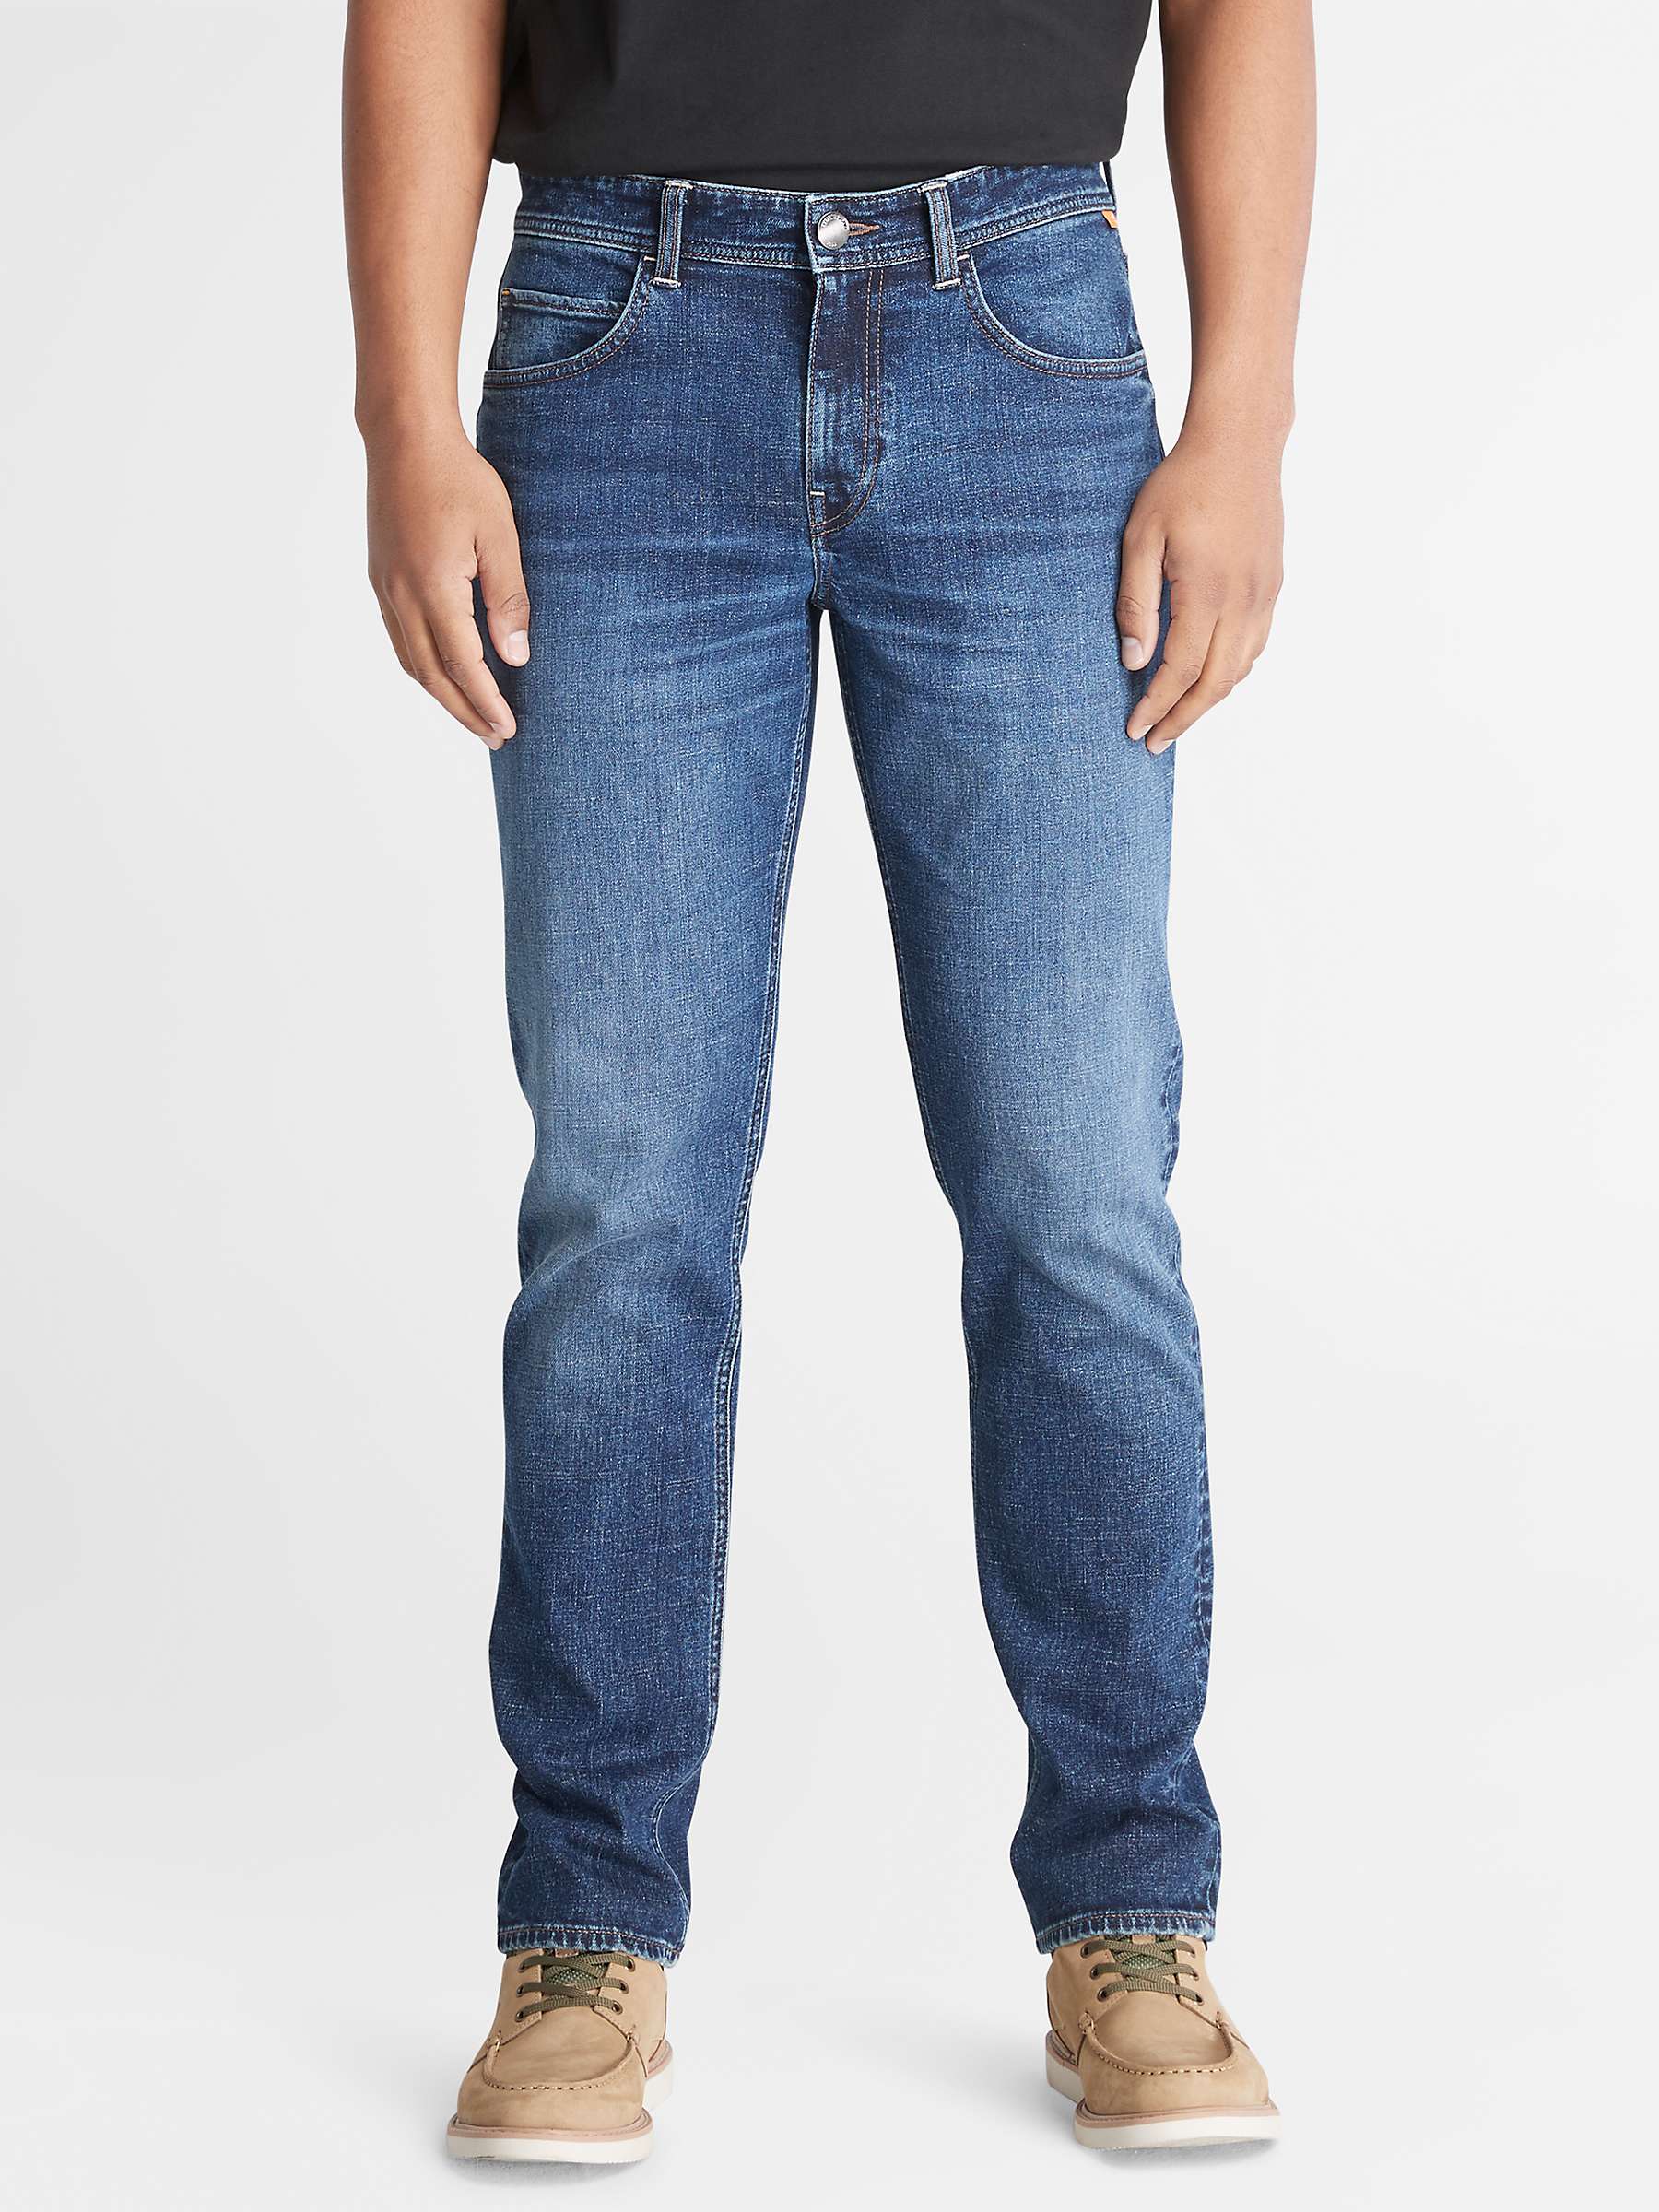 Buy Timberland Slim Fit Stretch Jeans, Mid Indigo Online at johnlewis.com